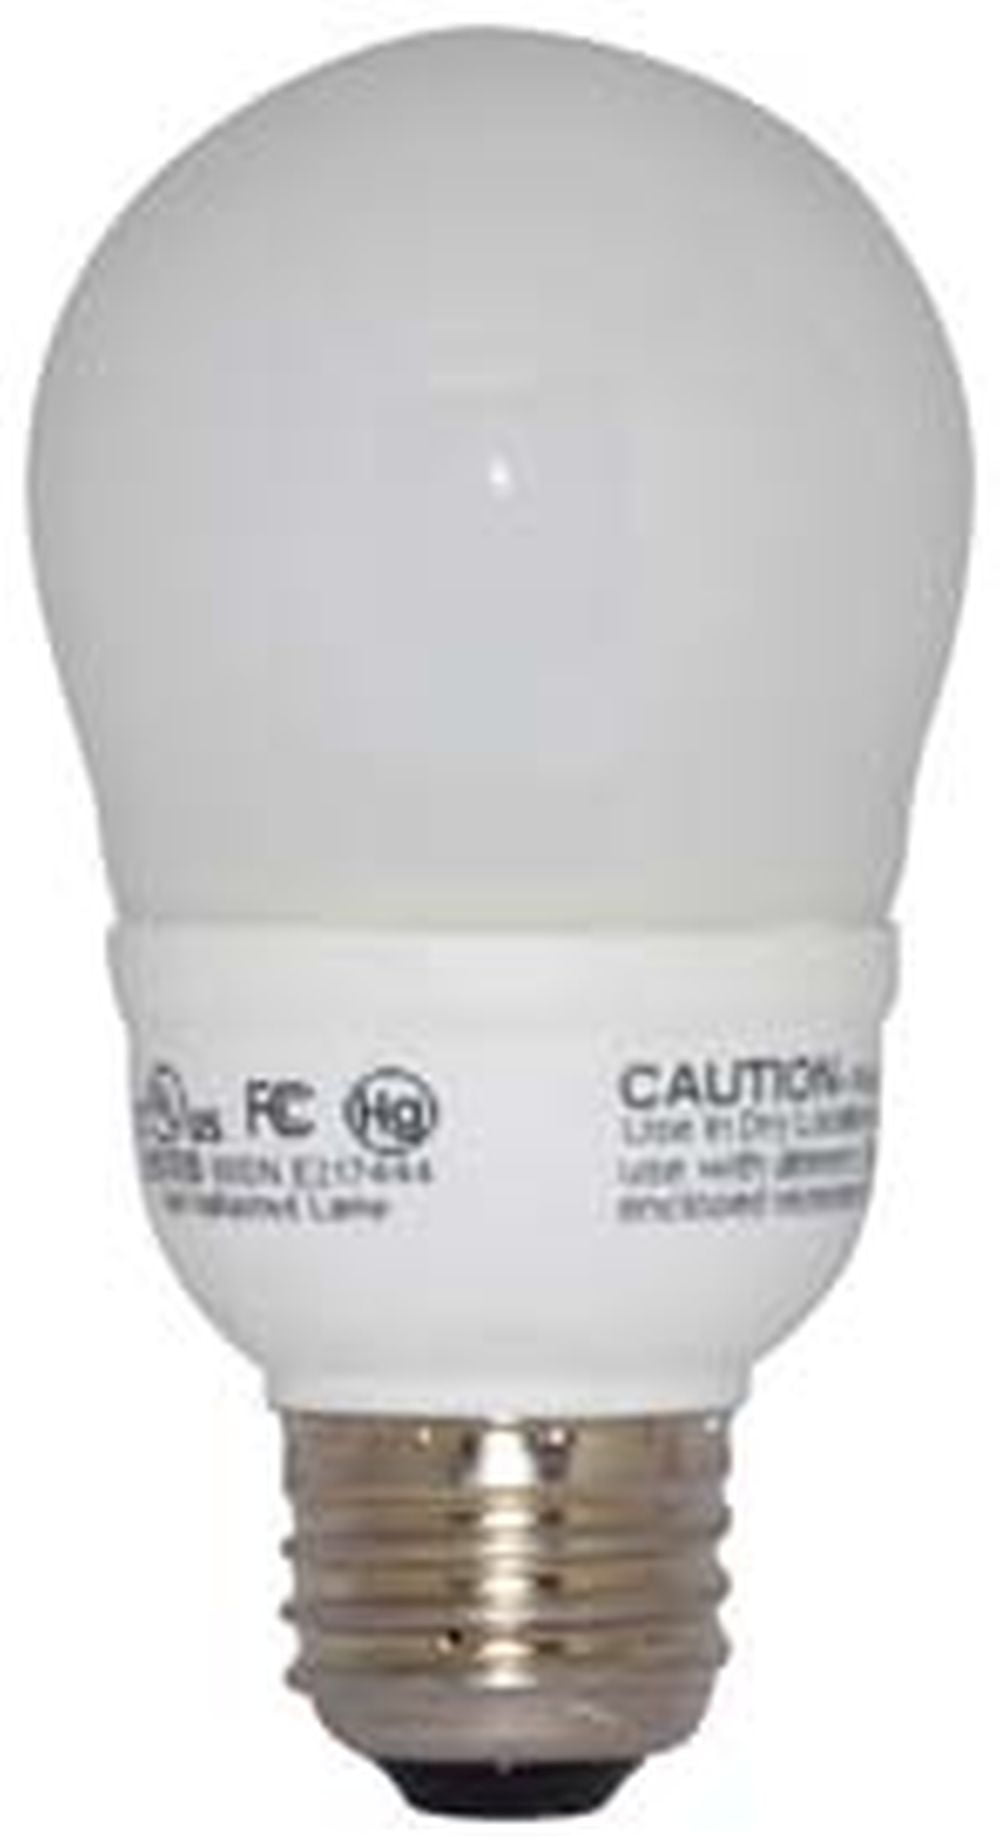 Samengesteld Slank Schatting Replacement for PHILIPS EL/A FAN 5W 2 PACK replacement light bulb lamp -  Walmart.com